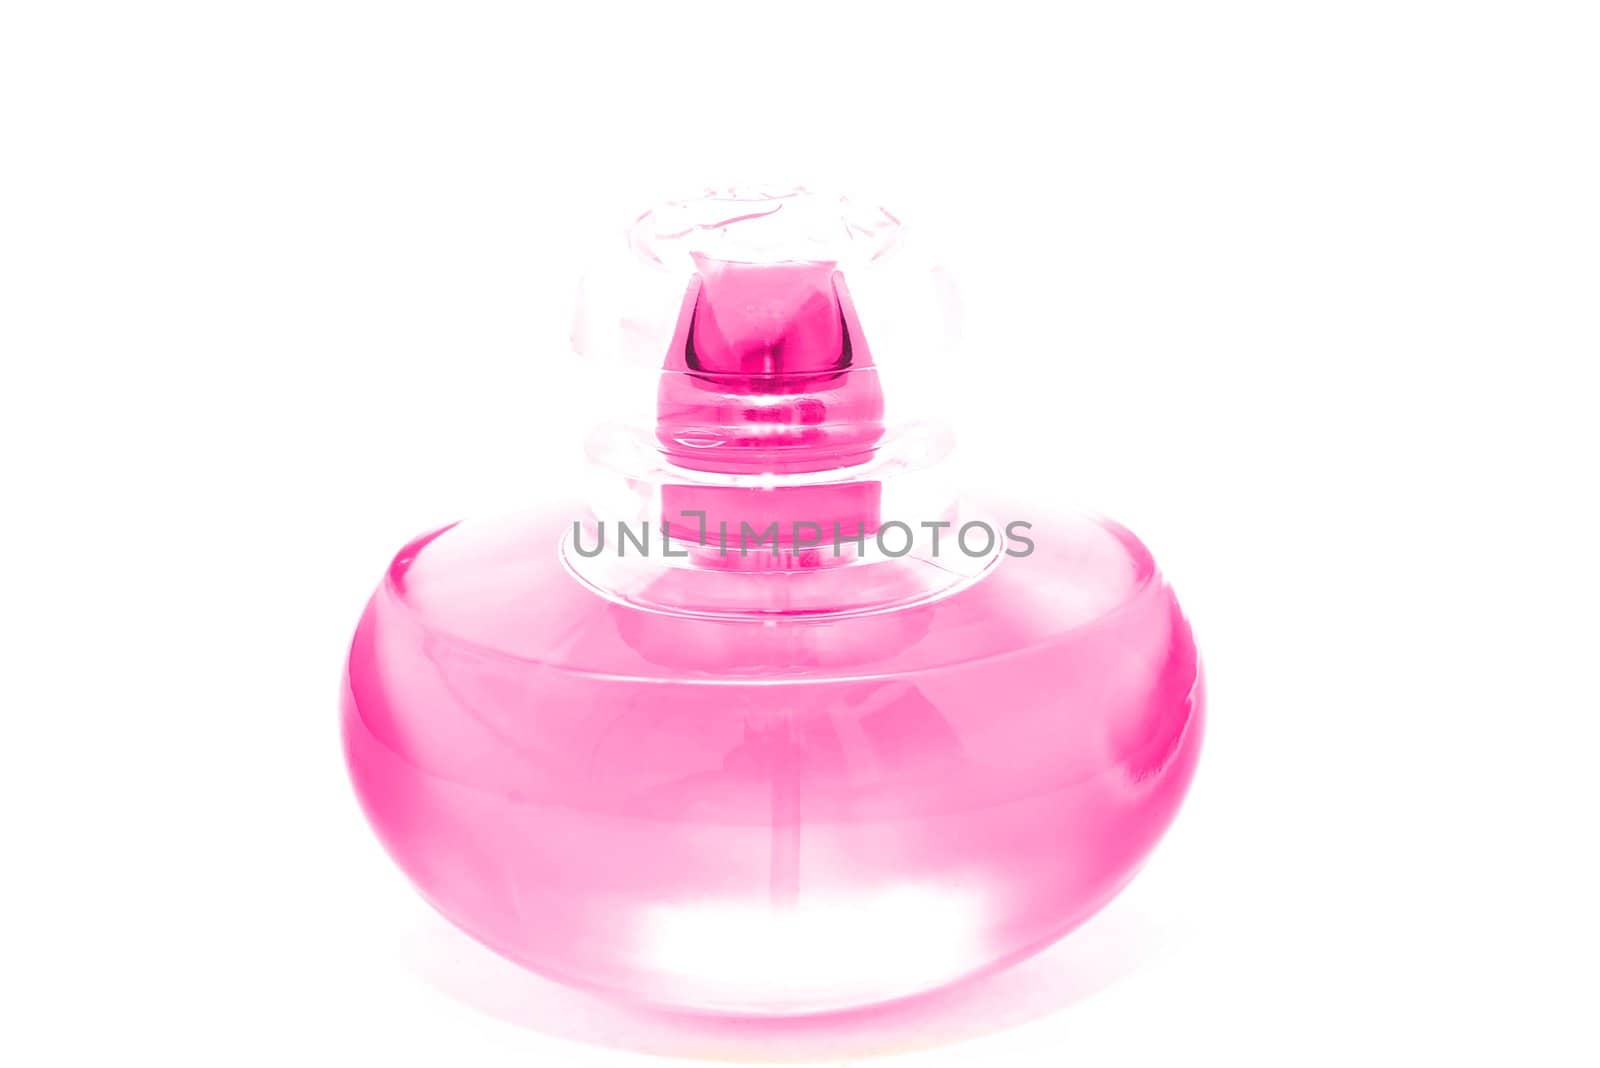 Perfume by alshadsky